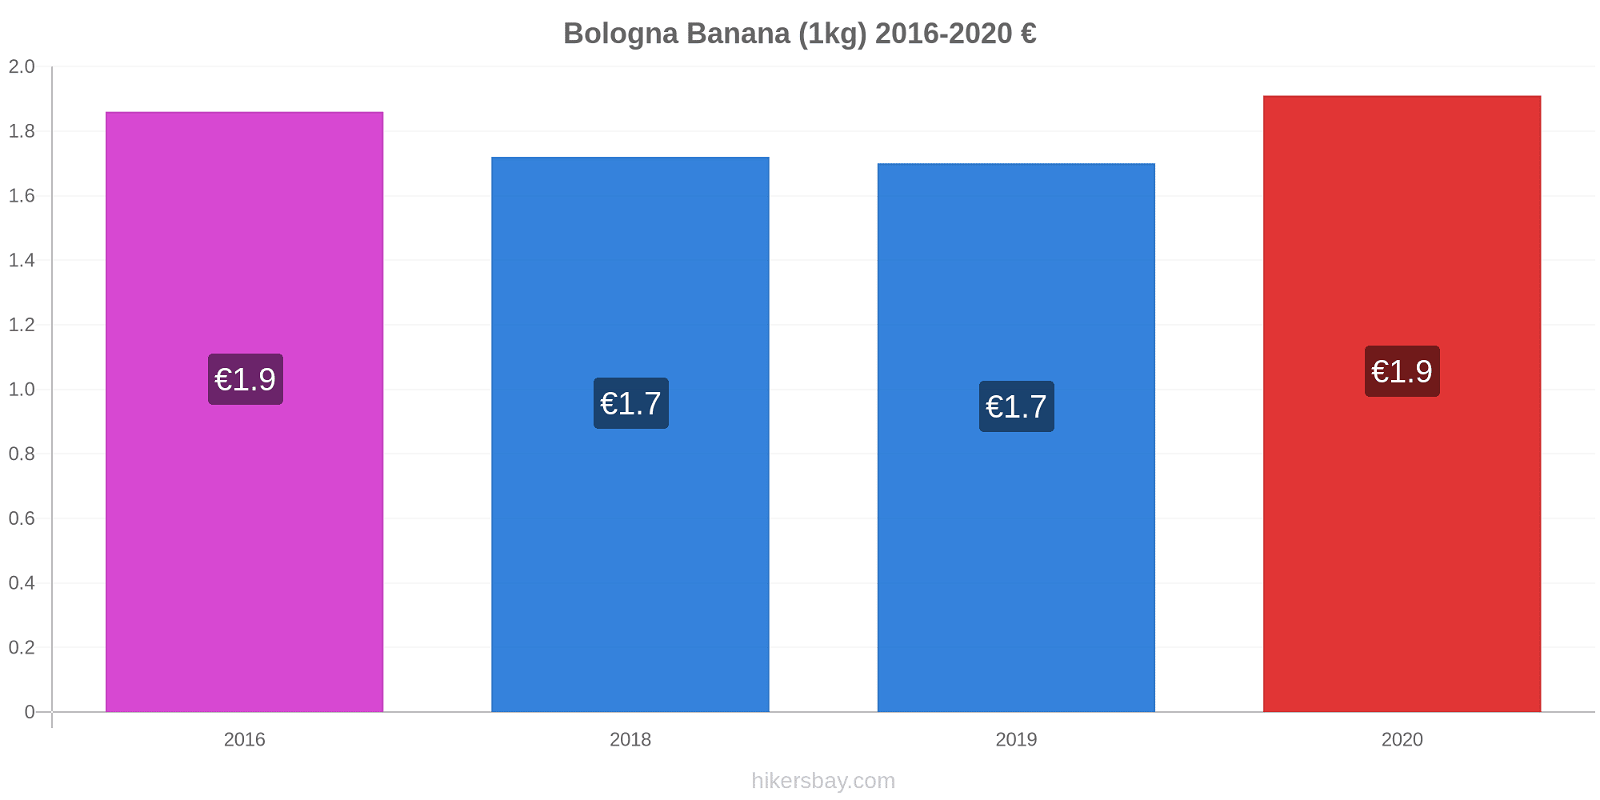 Bologna modificări de preț Banana (1kg) hikersbay.com